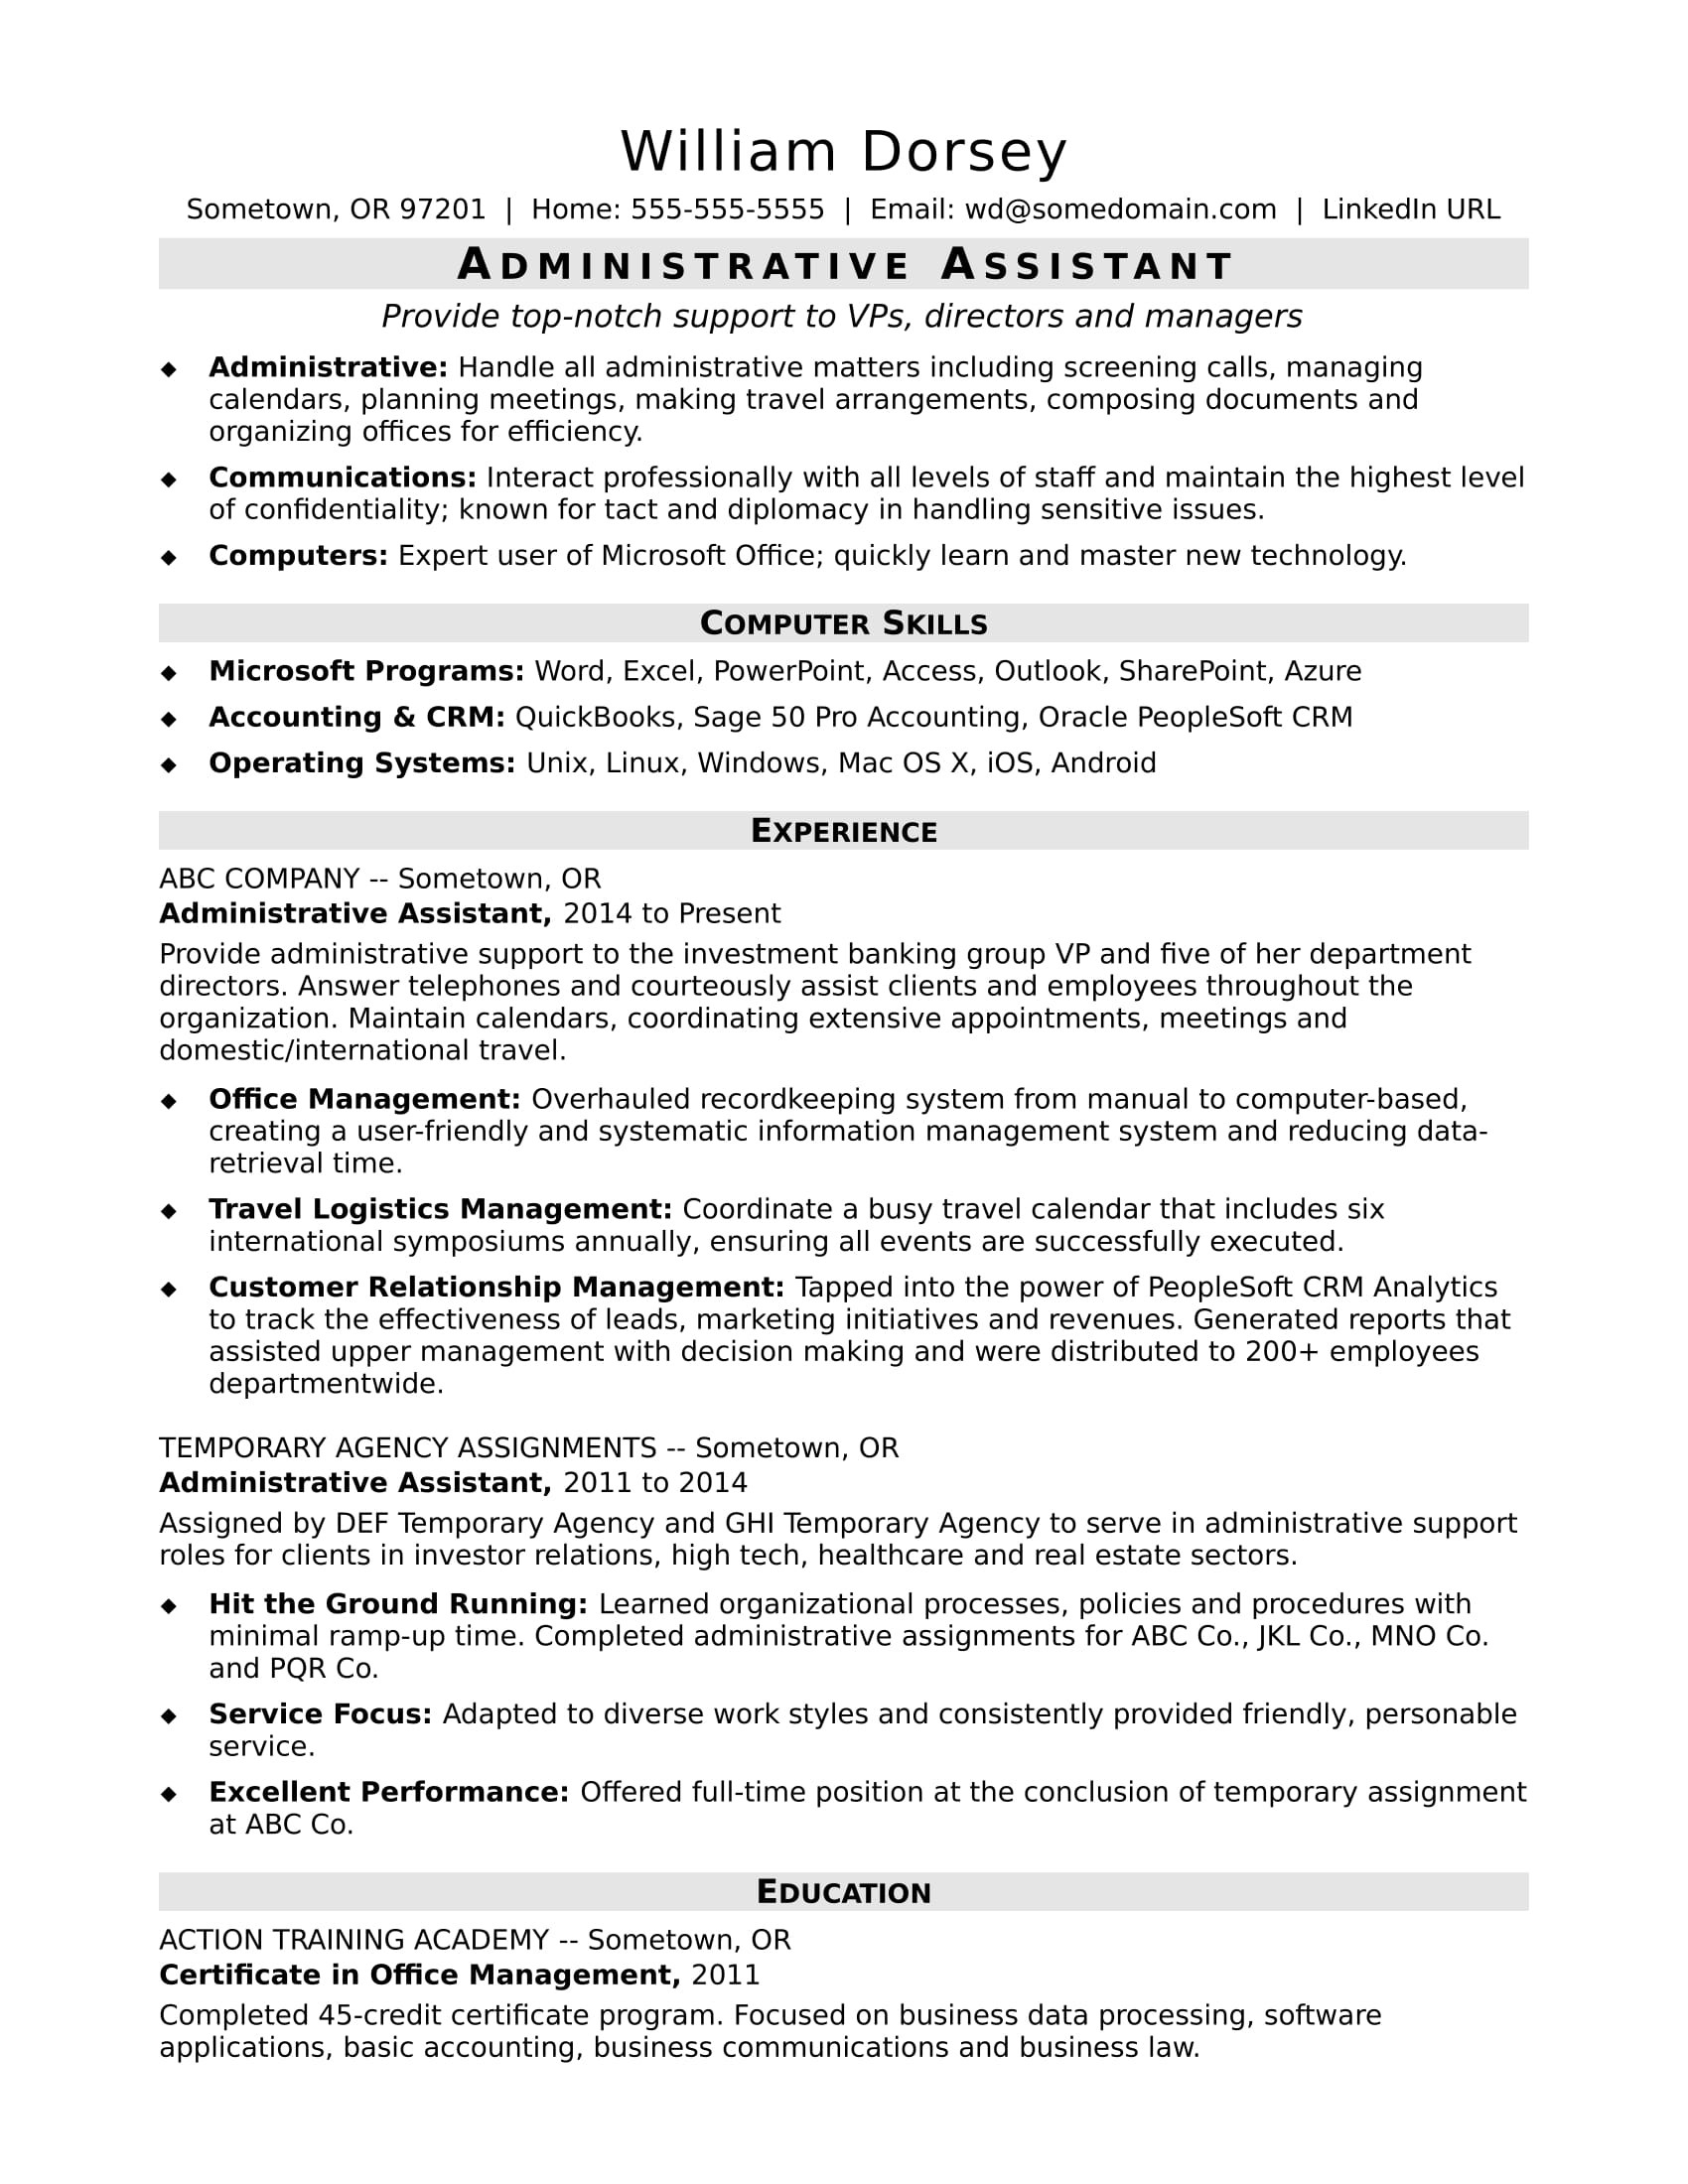 Sample Professional Resume for Administrative assistant Midlevel Administrative assistant Resume Sample Monster.com